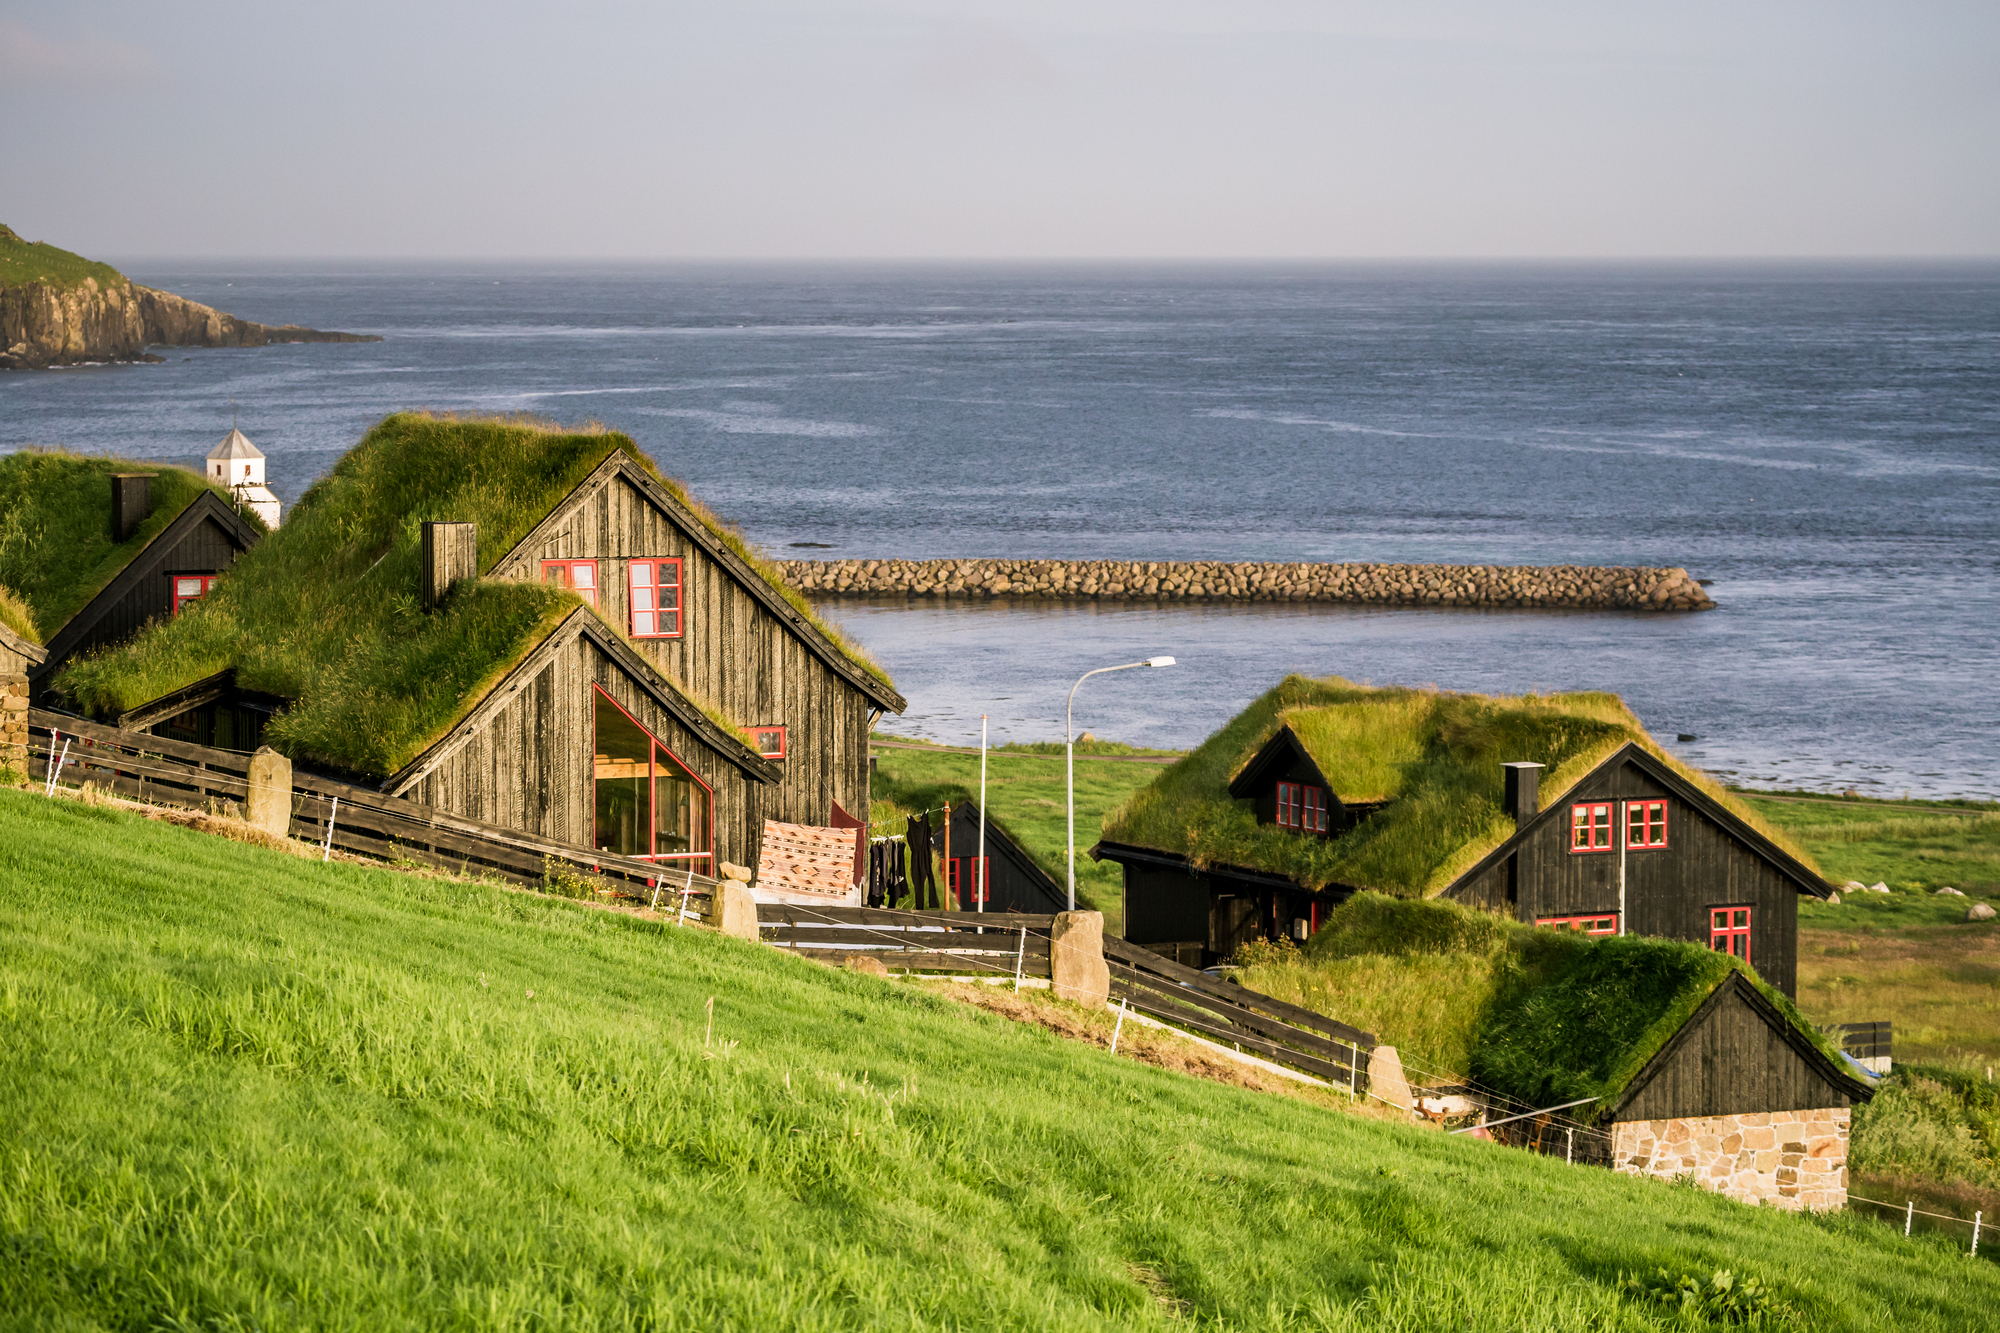 Kirkjubour villagein Streymoy, Faroe Islands